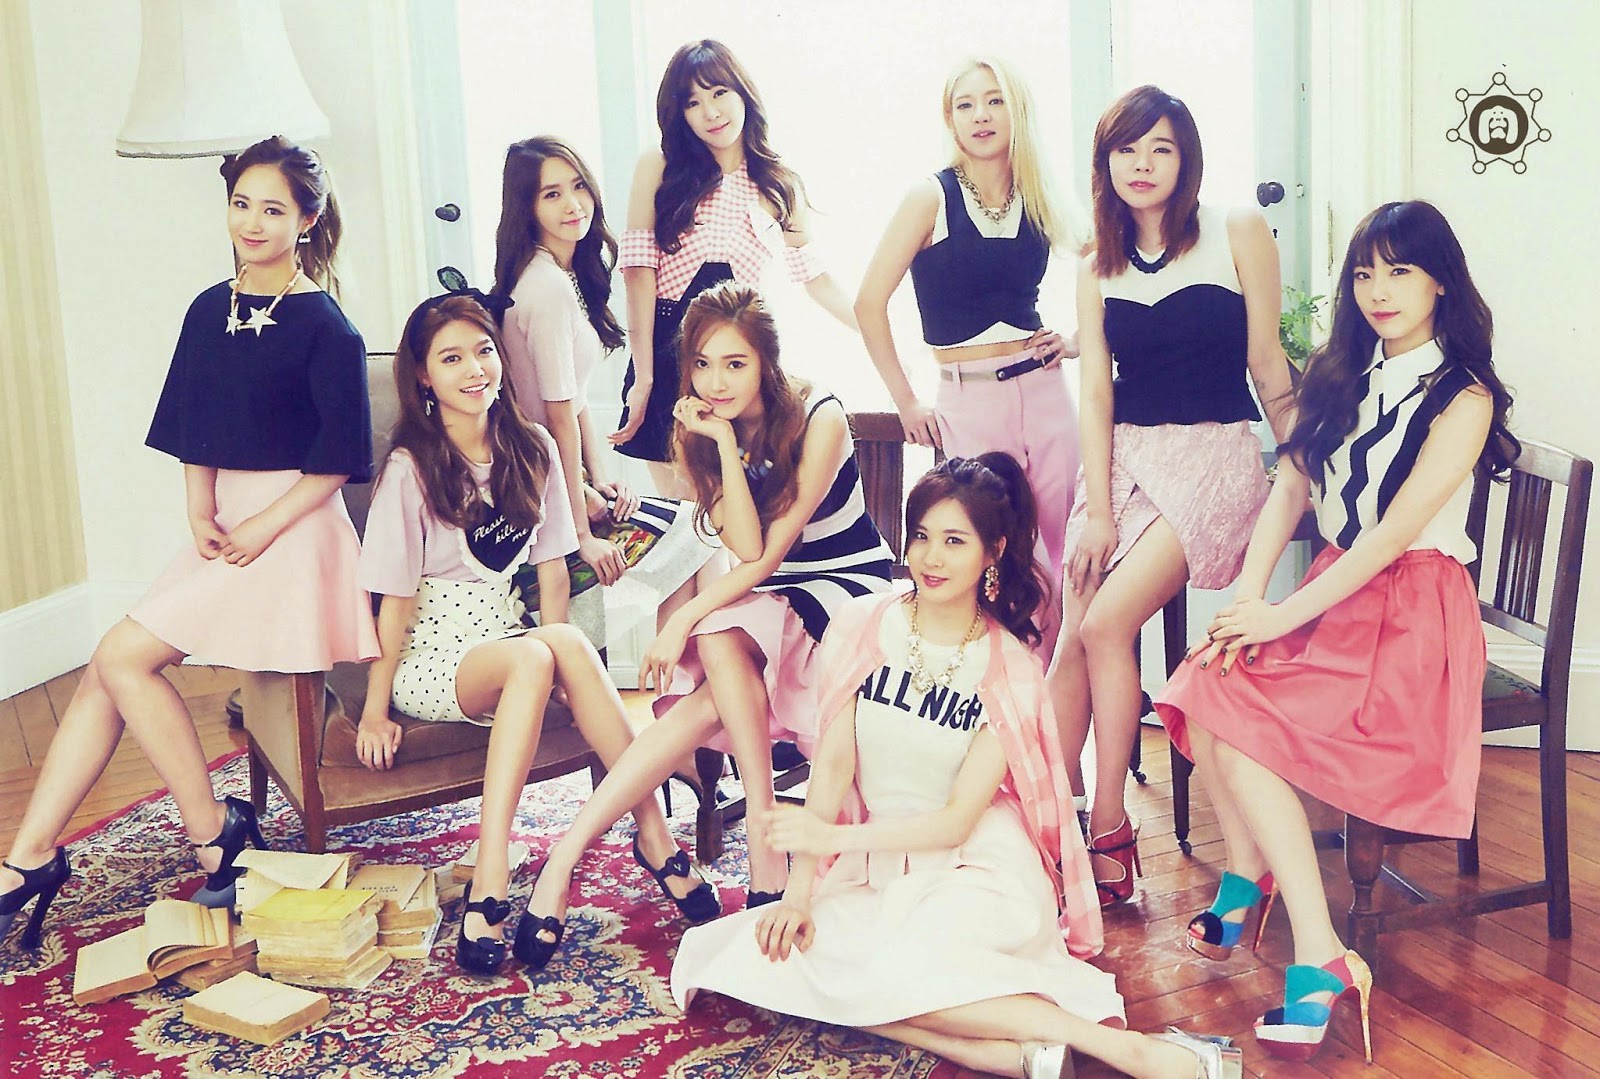 Snsd Girls Generation The Best Scan Wallpaper Hd Photos Hot Sexy Beauty Club